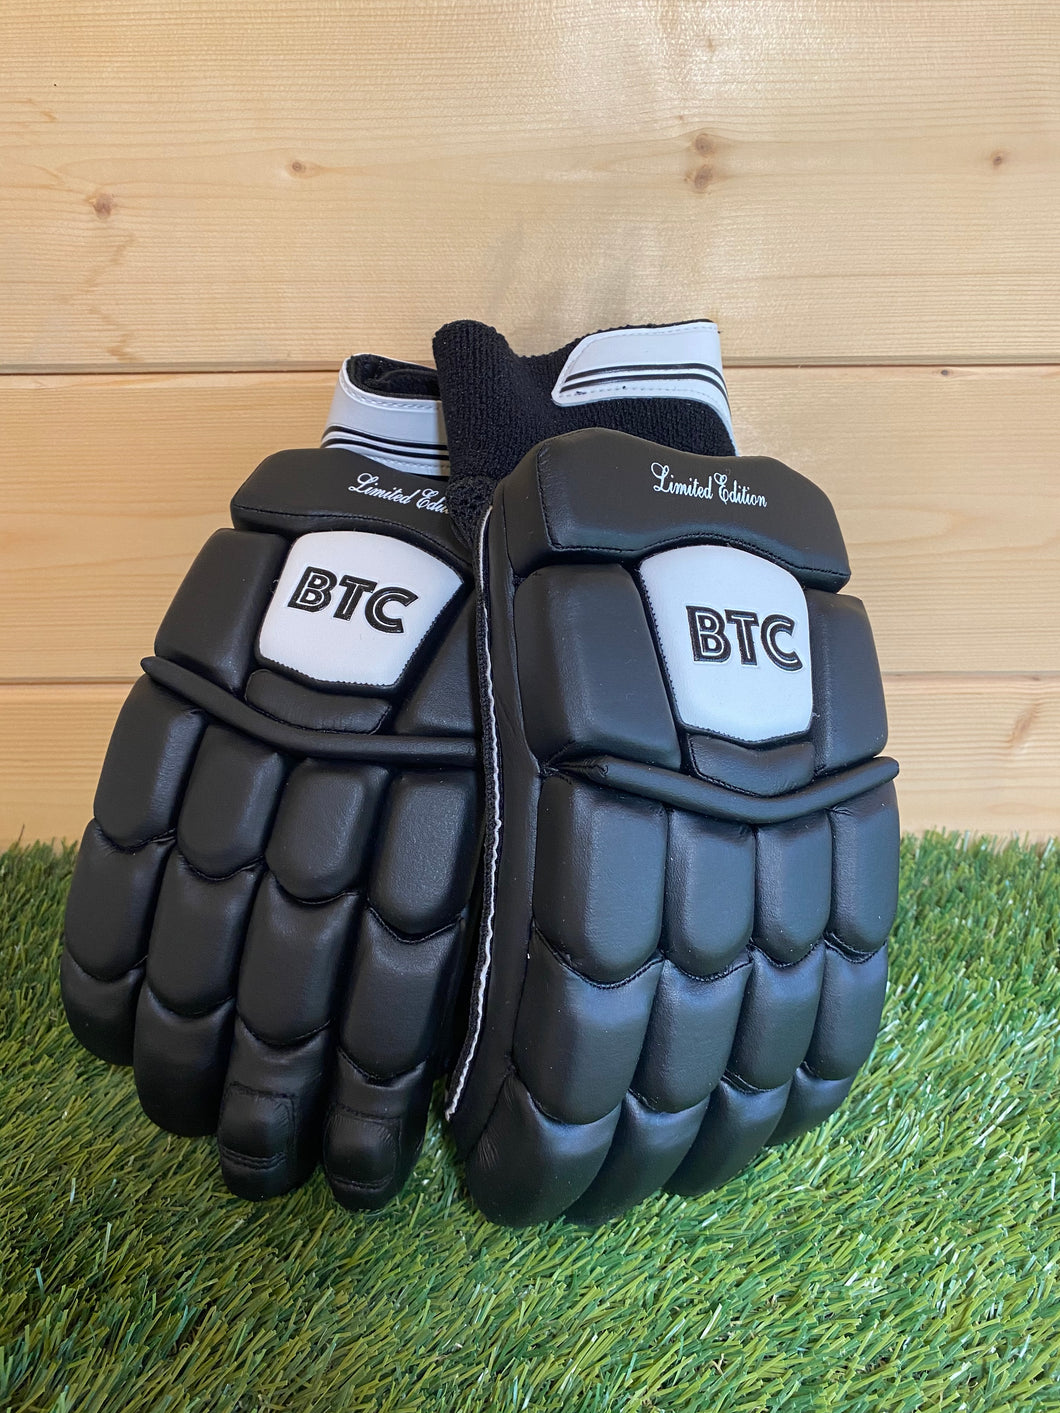 BTC Limited Edition Black Batting Gloves